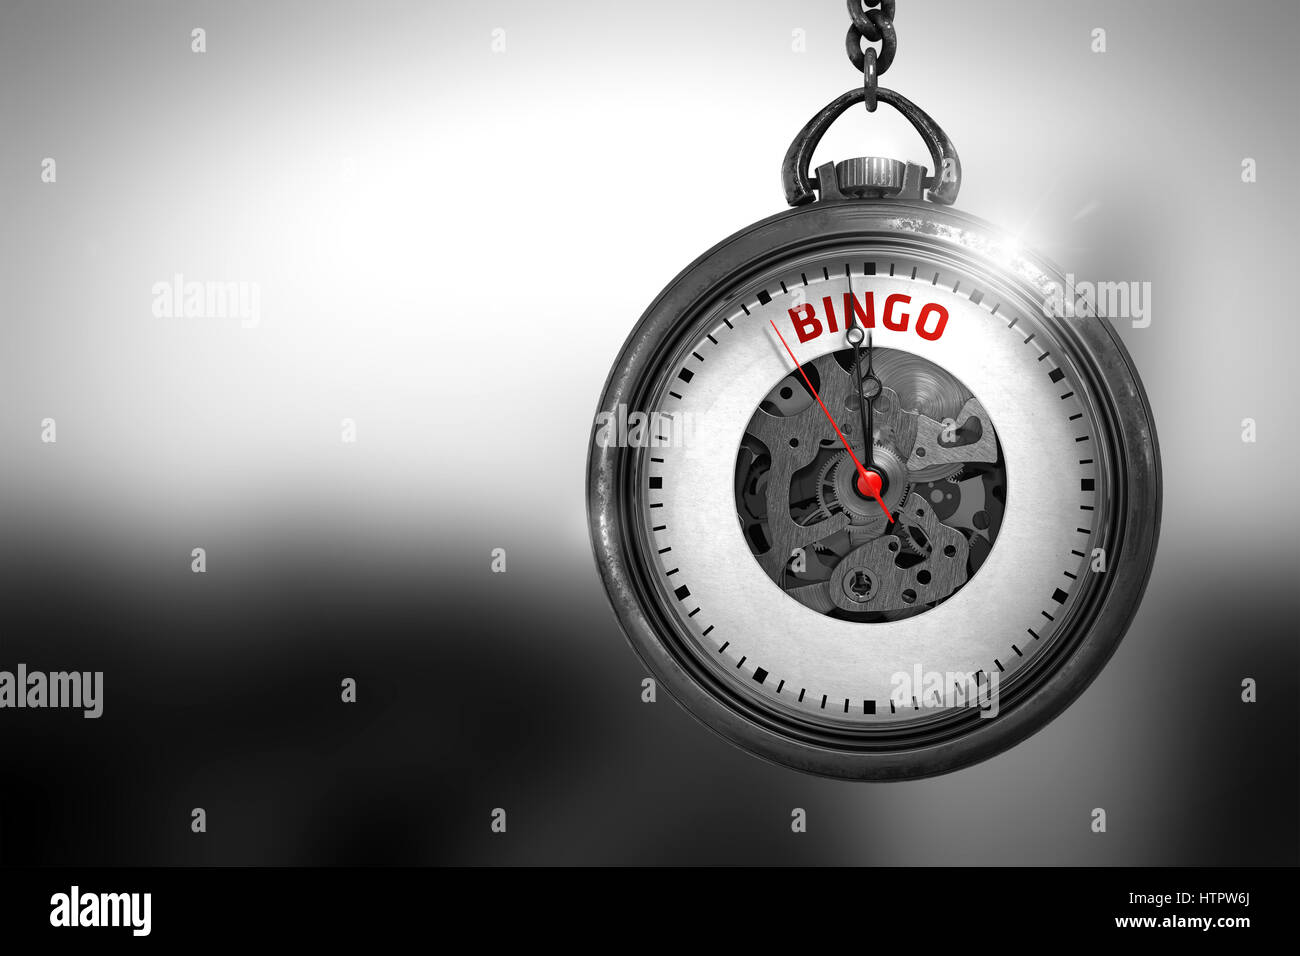 Bingo on Vintage Watch. 3D Illustration. Stock Photo